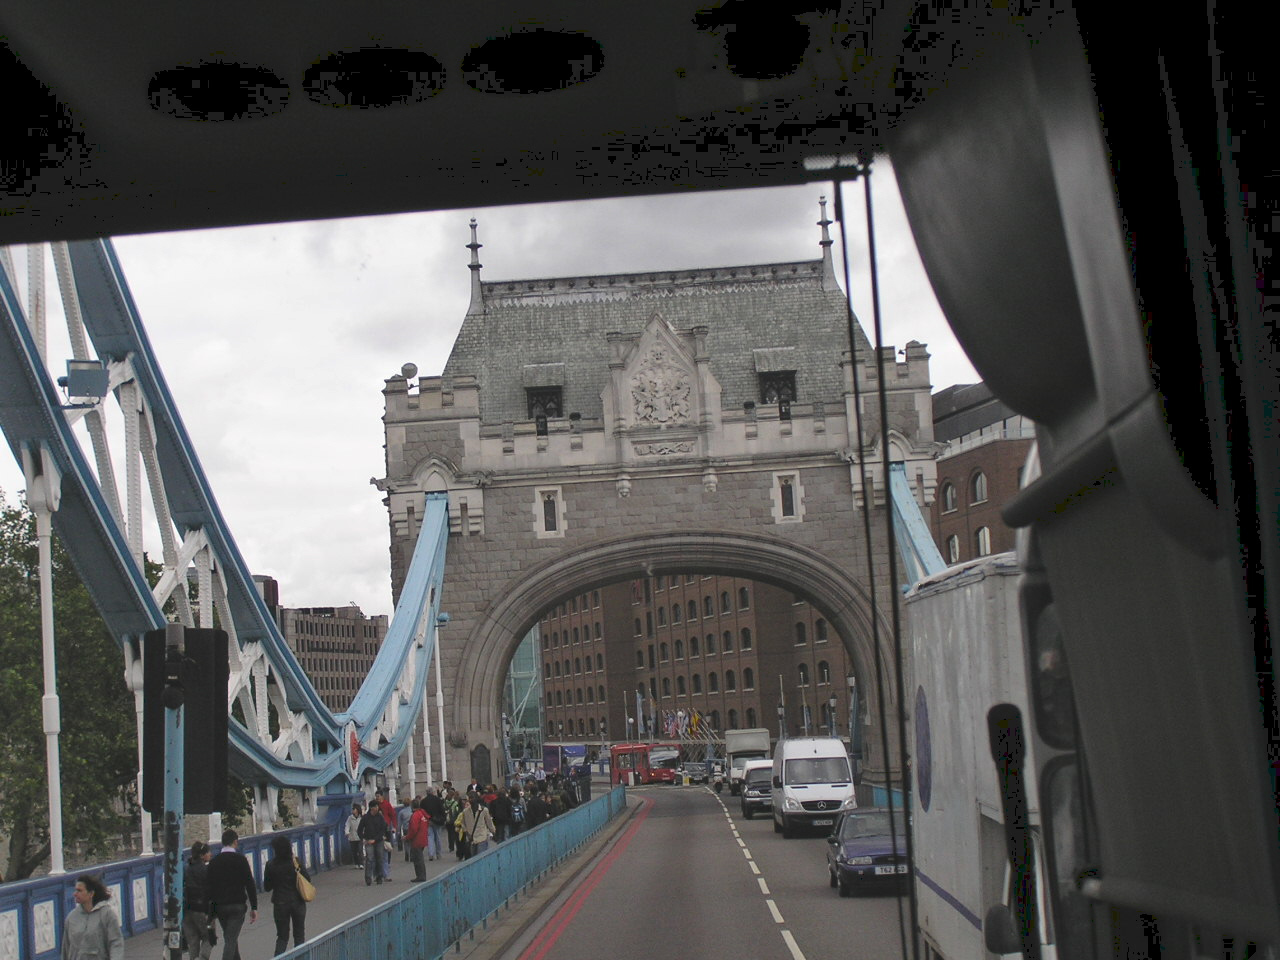 London 268 Tower híd